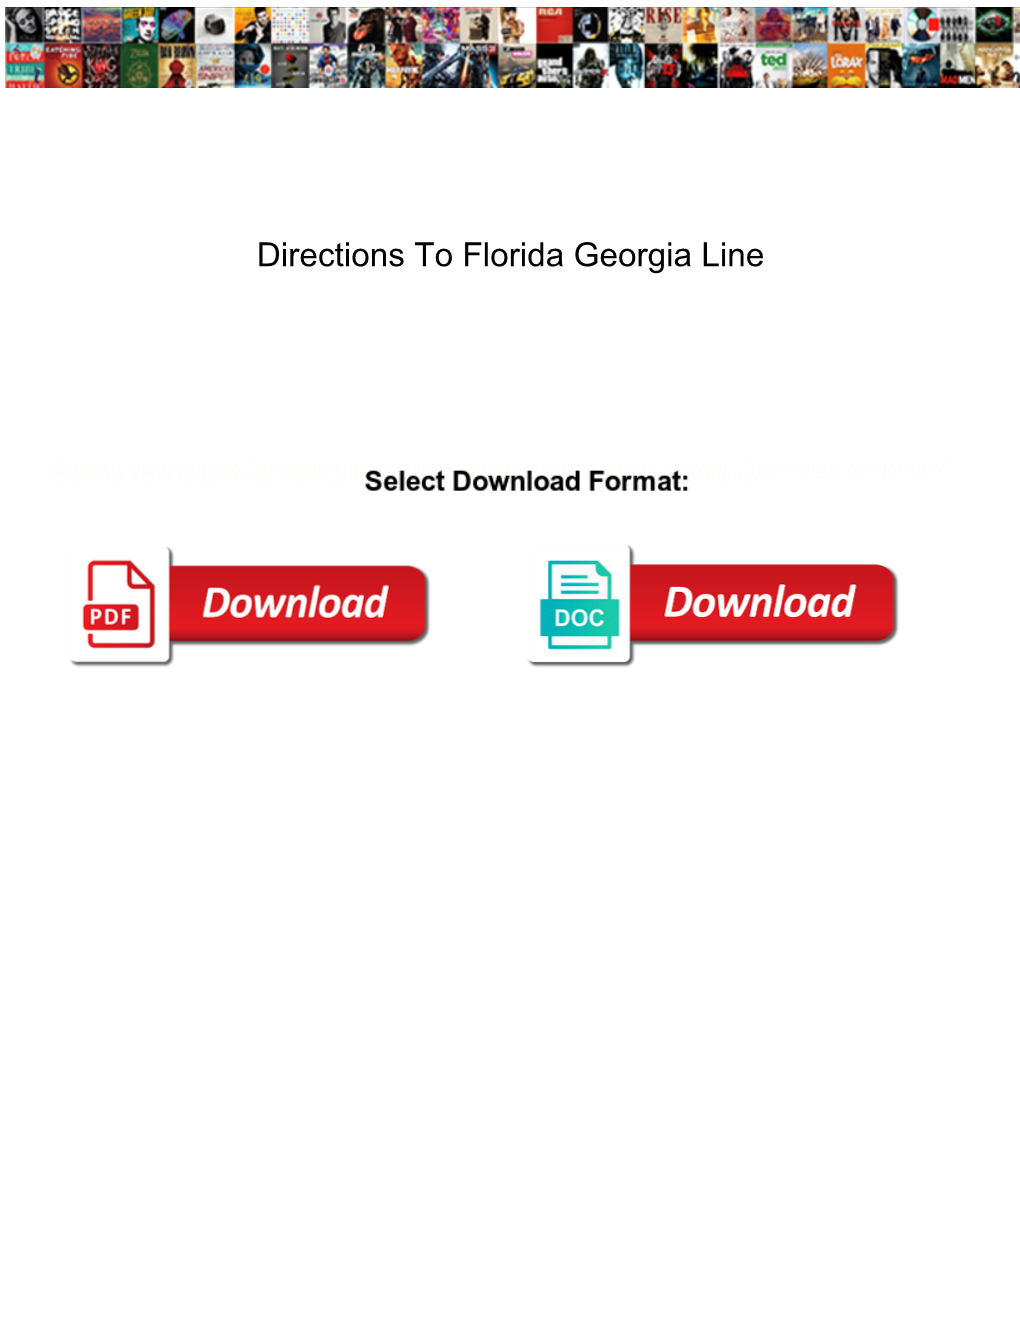 Directions to Florida Georgia Line